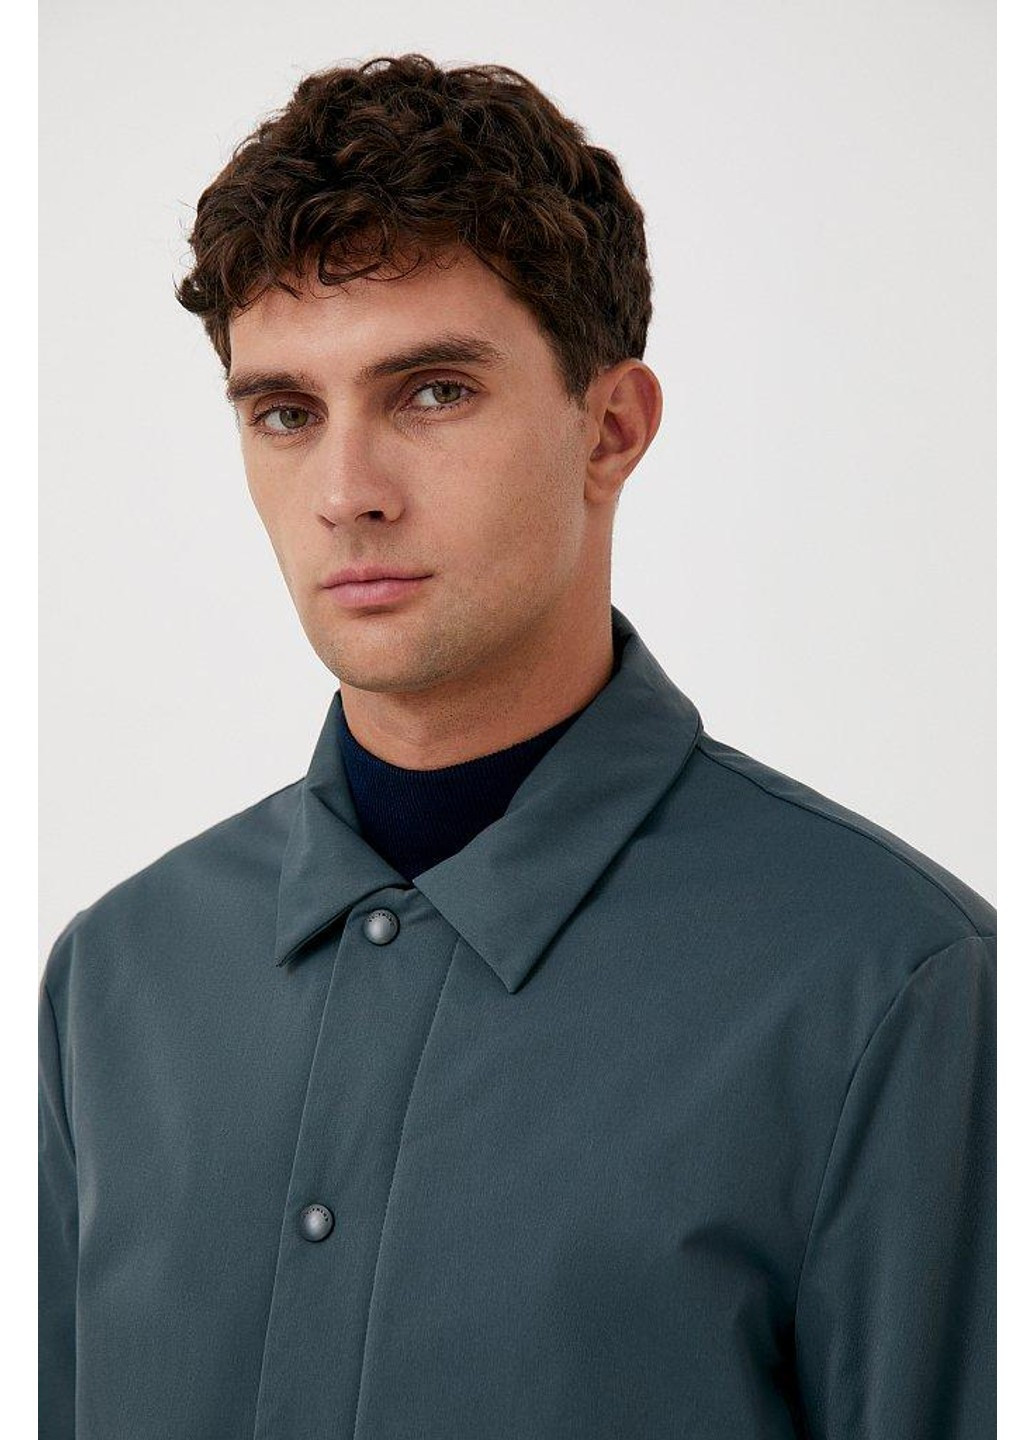 Зеленая демисезонная куртка-рубашка fab21007-524 Finn Flare